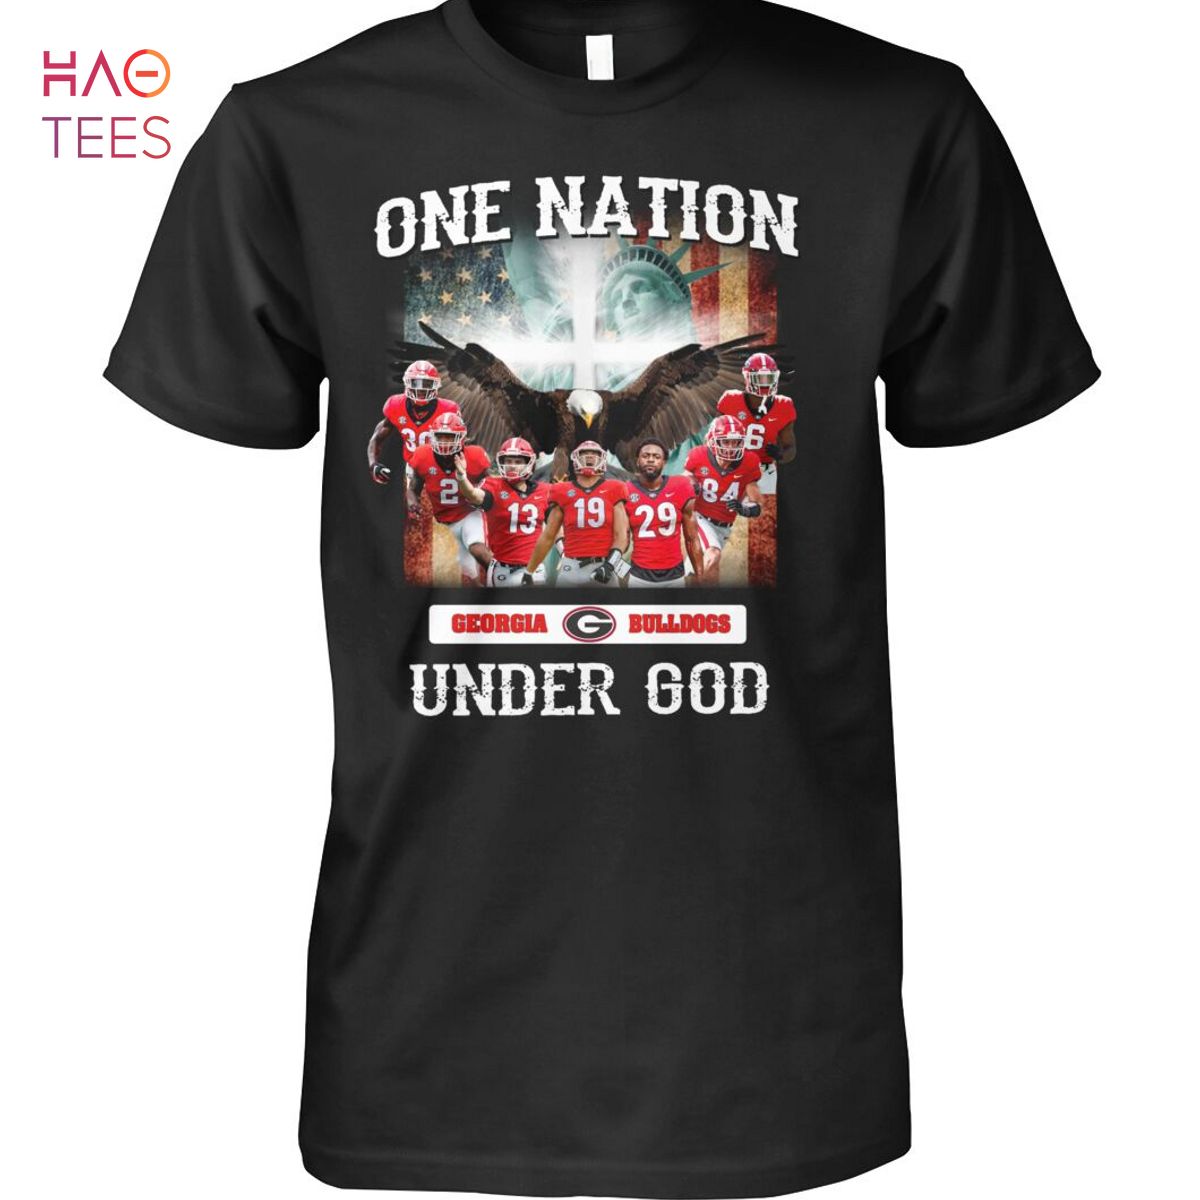 One Nation Under God Shirt Limited Edition